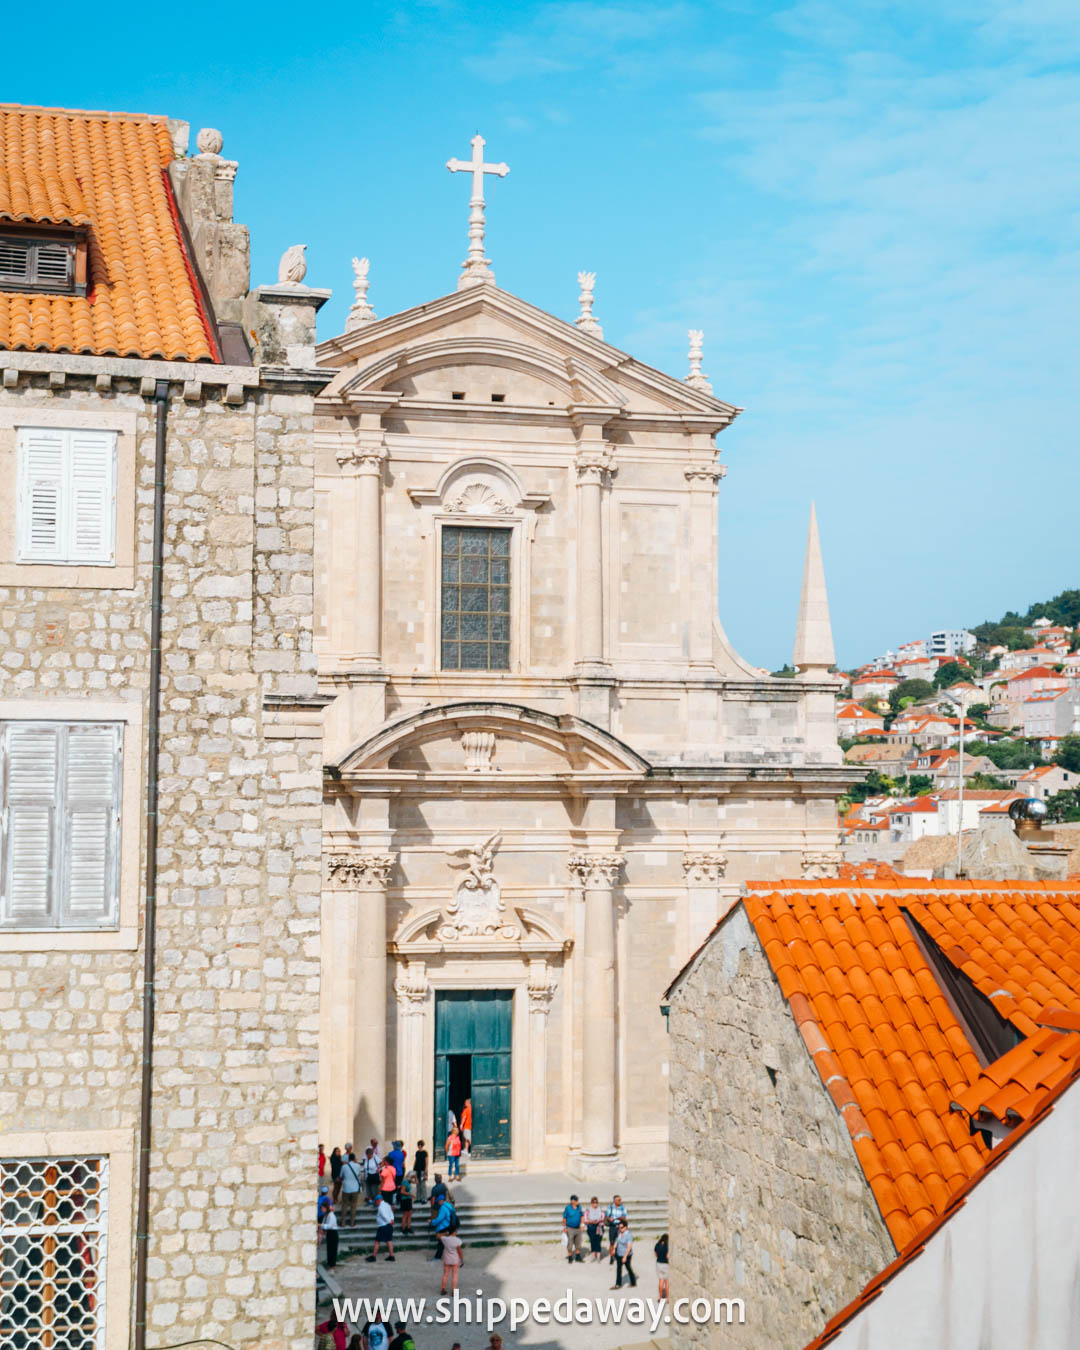 Church of St. Ignatius Dubrovnik Old Town - Dubrovnik Old Town - Dubrovnik Old City - Dubrovnik Old Town Things To Do - Dubrovnik Old Town Attractions